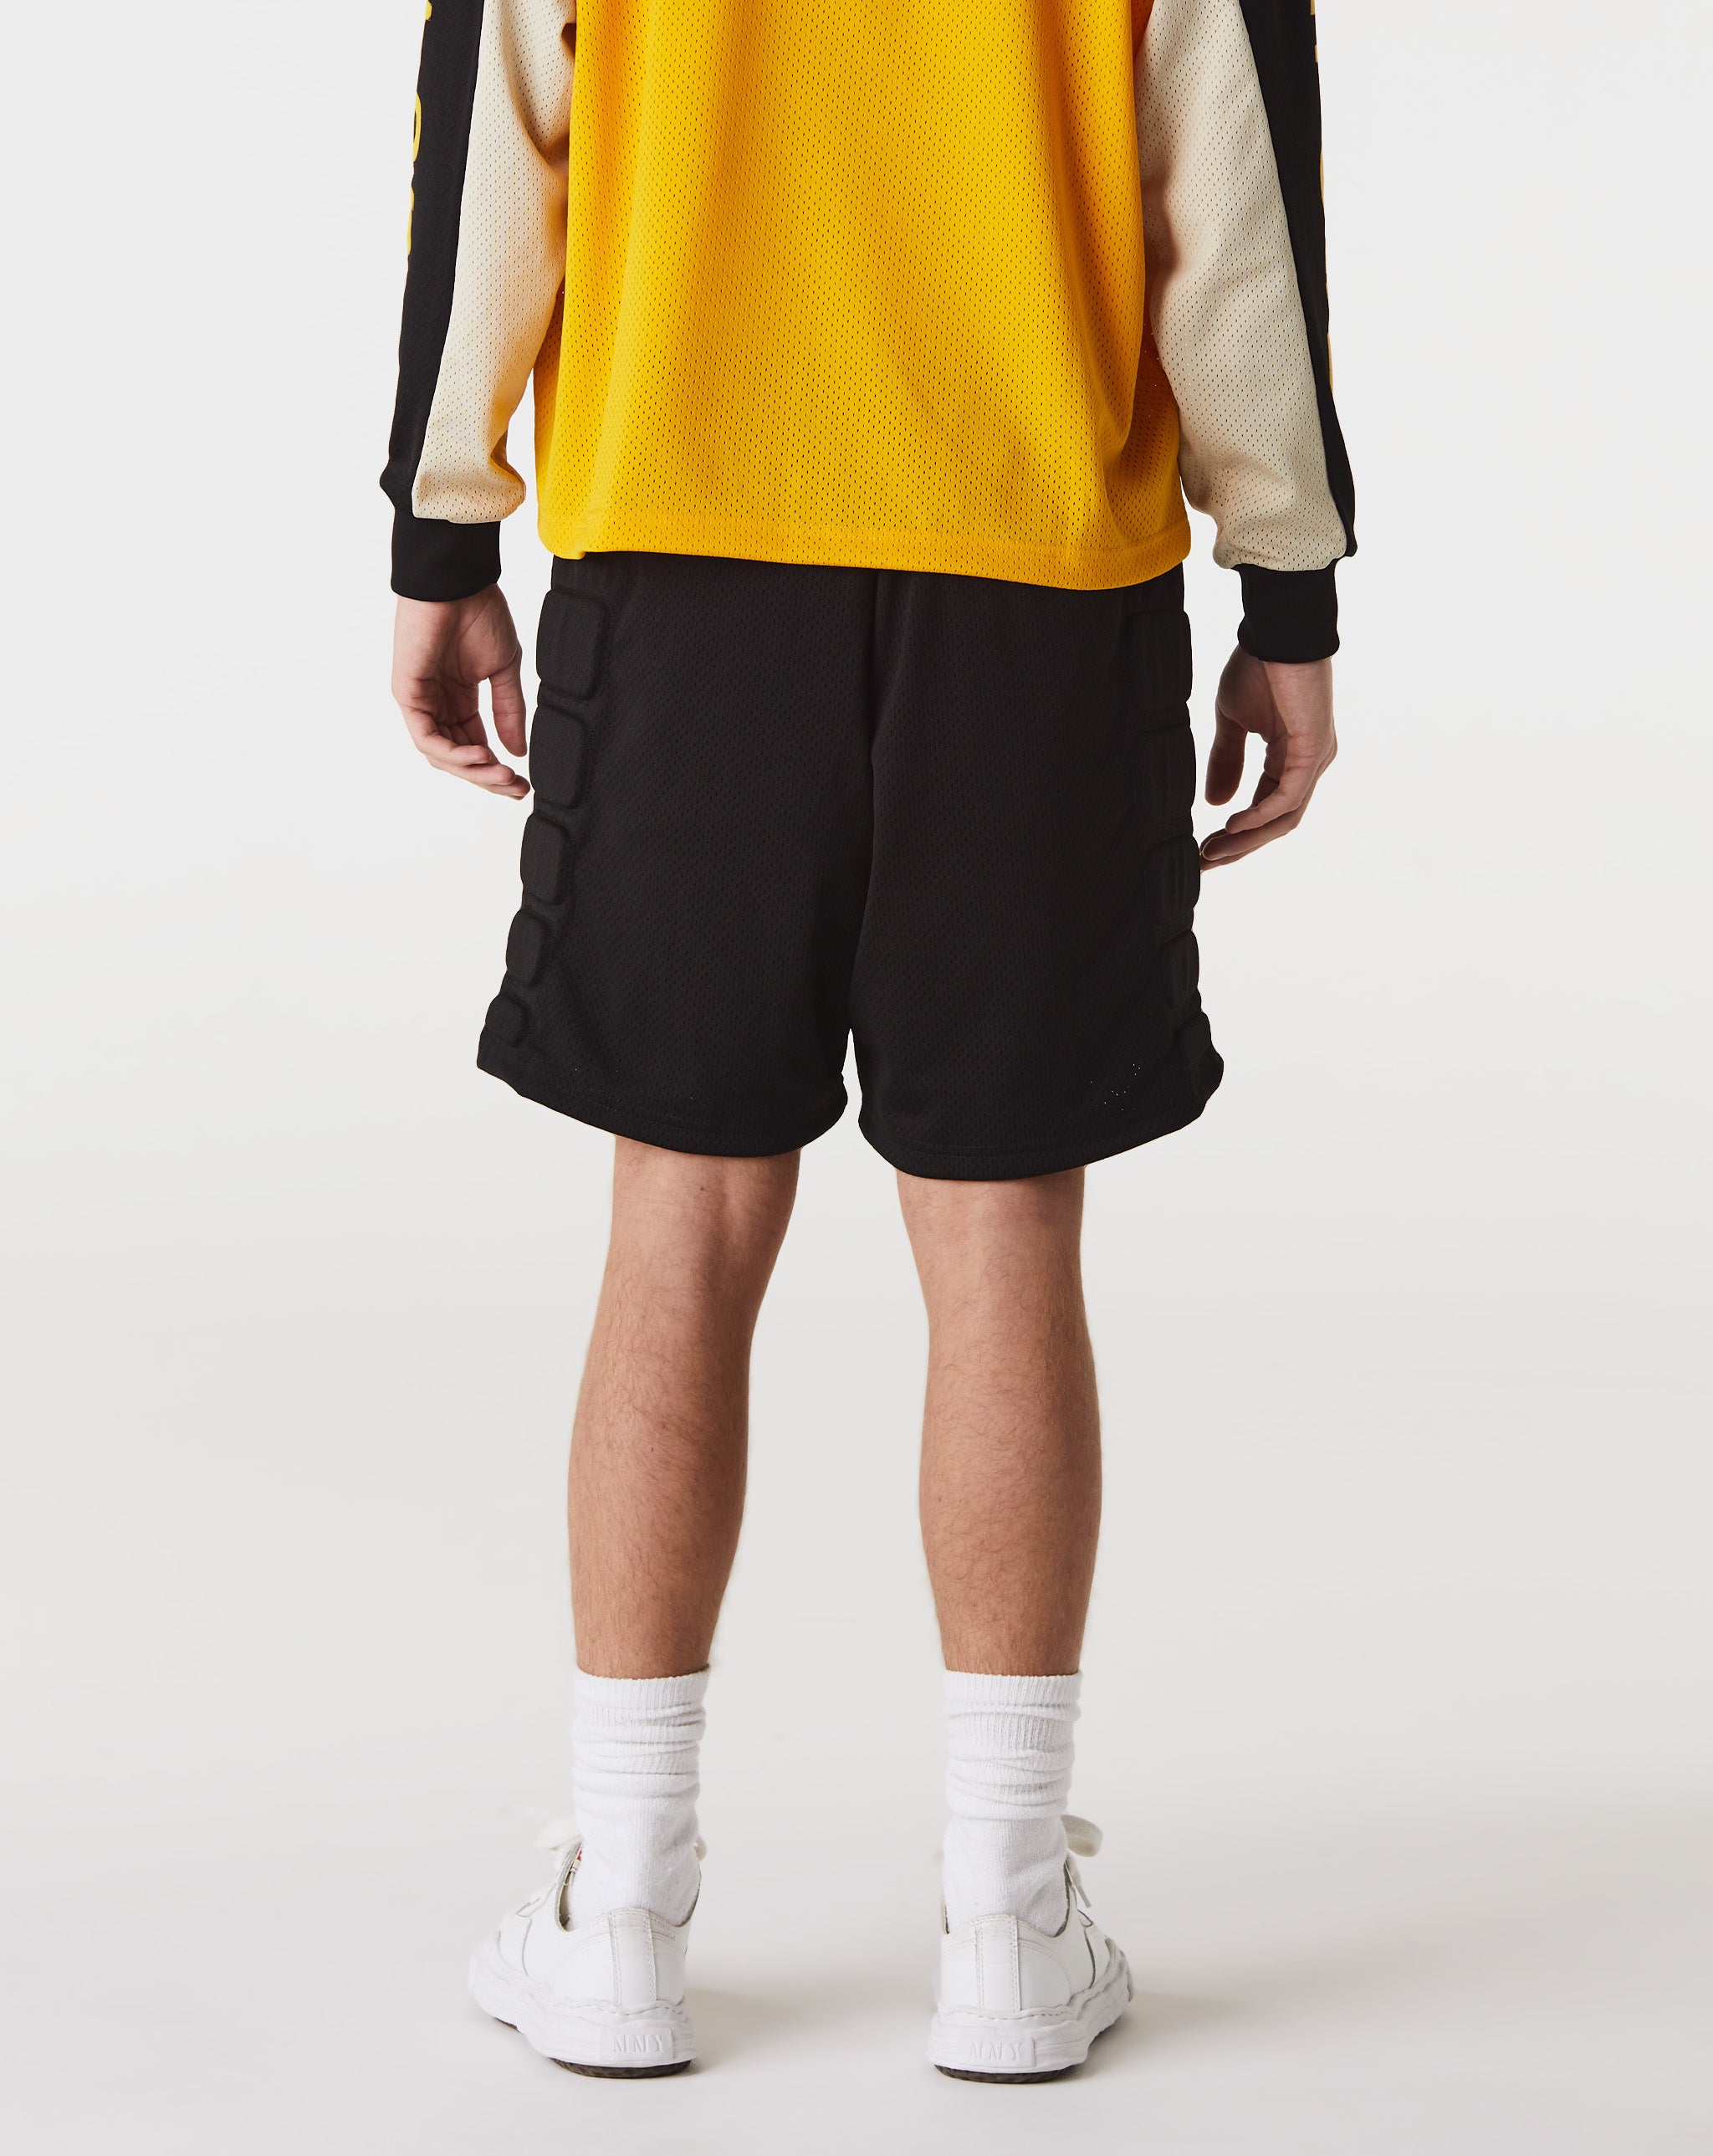 Satoshi Nakamoto adidas 3-Stripe shorts Phipps Blue  - Cheap Urlfreeze Jordan outlet